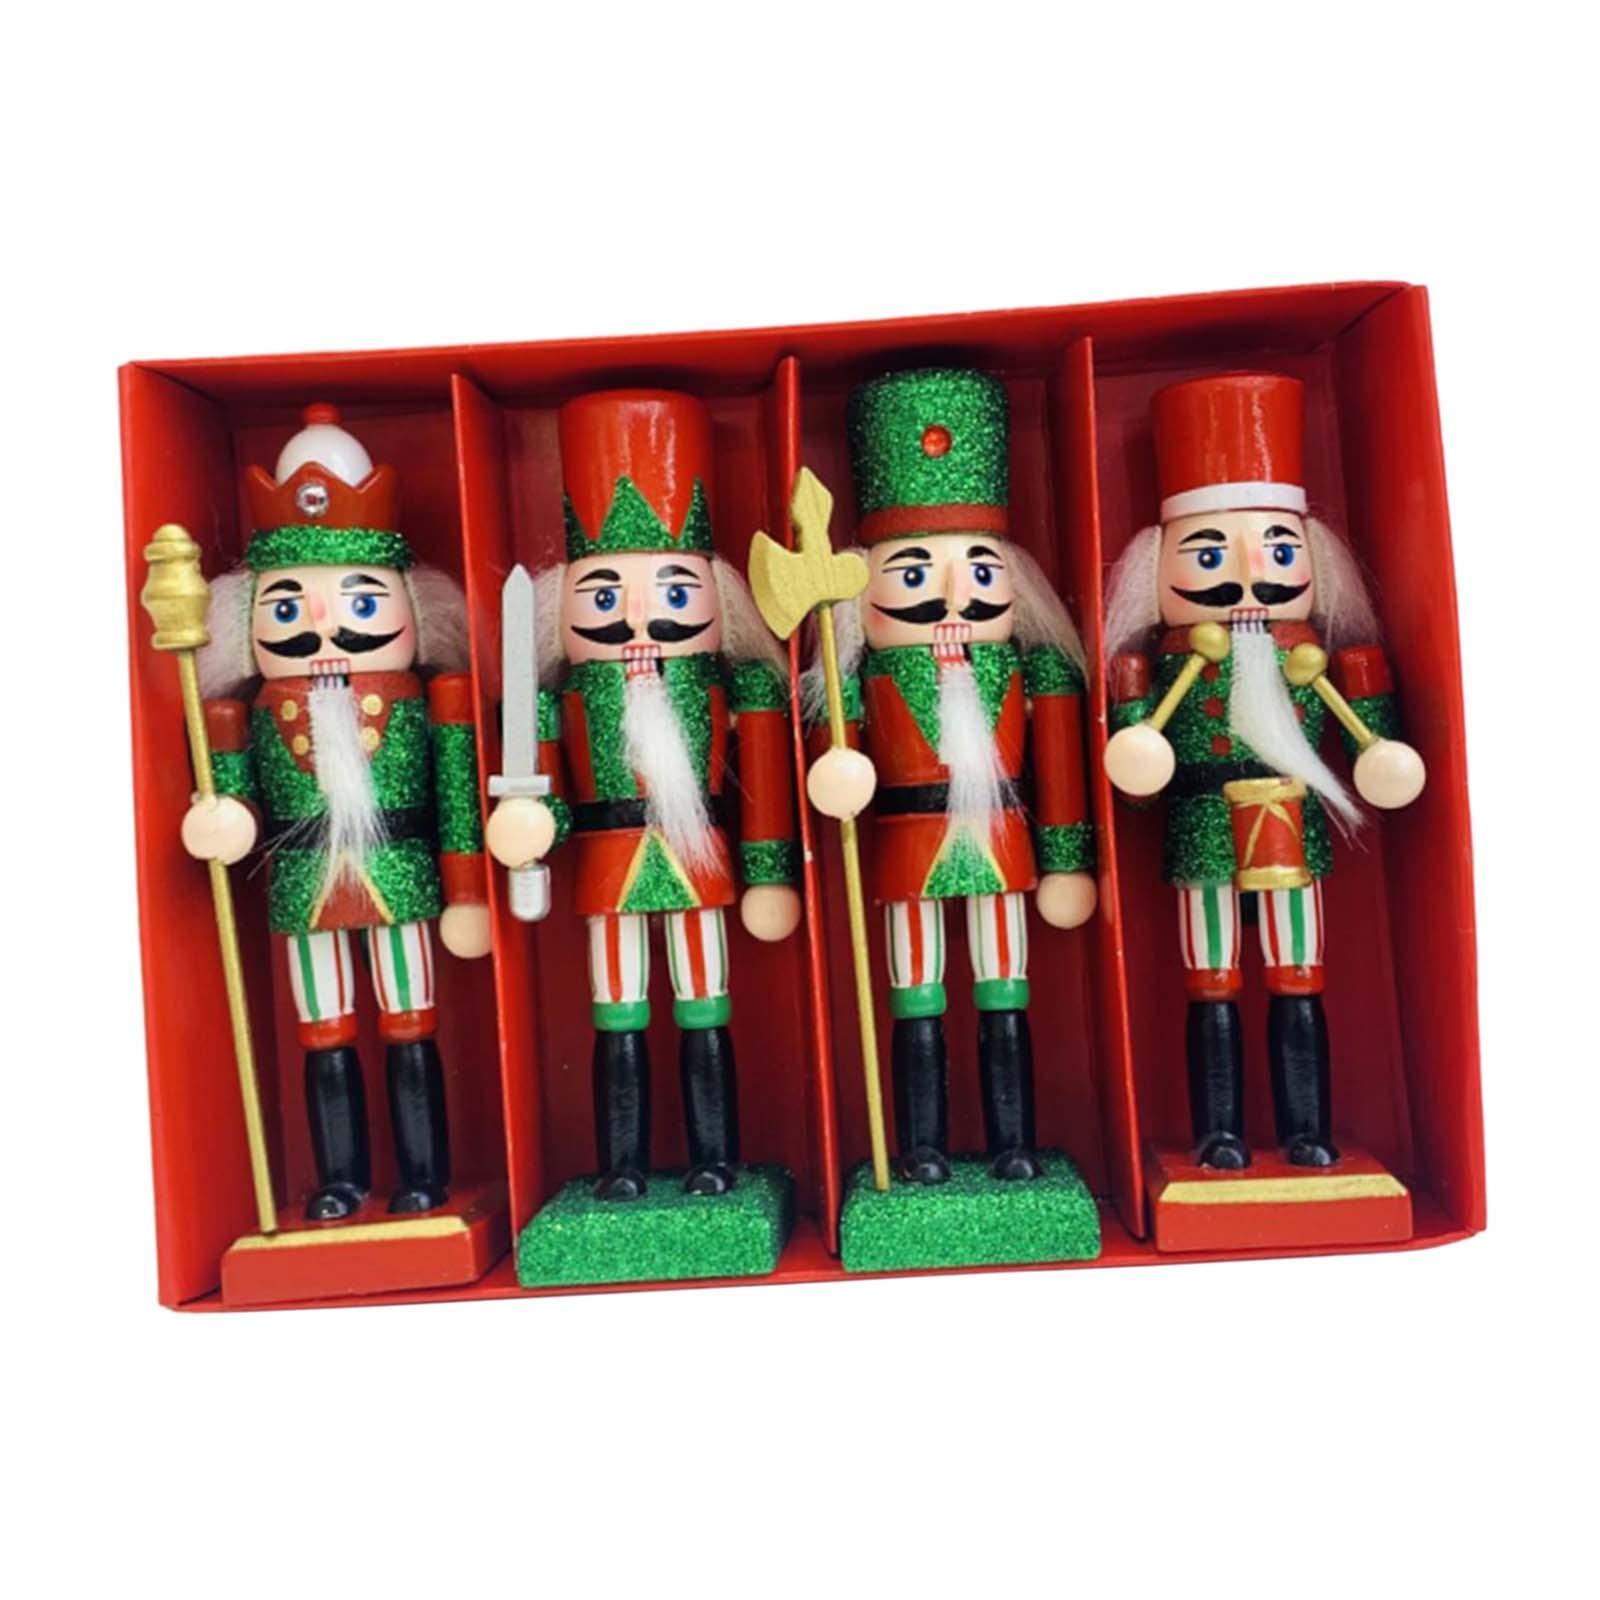 4x Wooden Nutcracker Figurine Nutcracker Figures Toy for Festival Kids Gifts